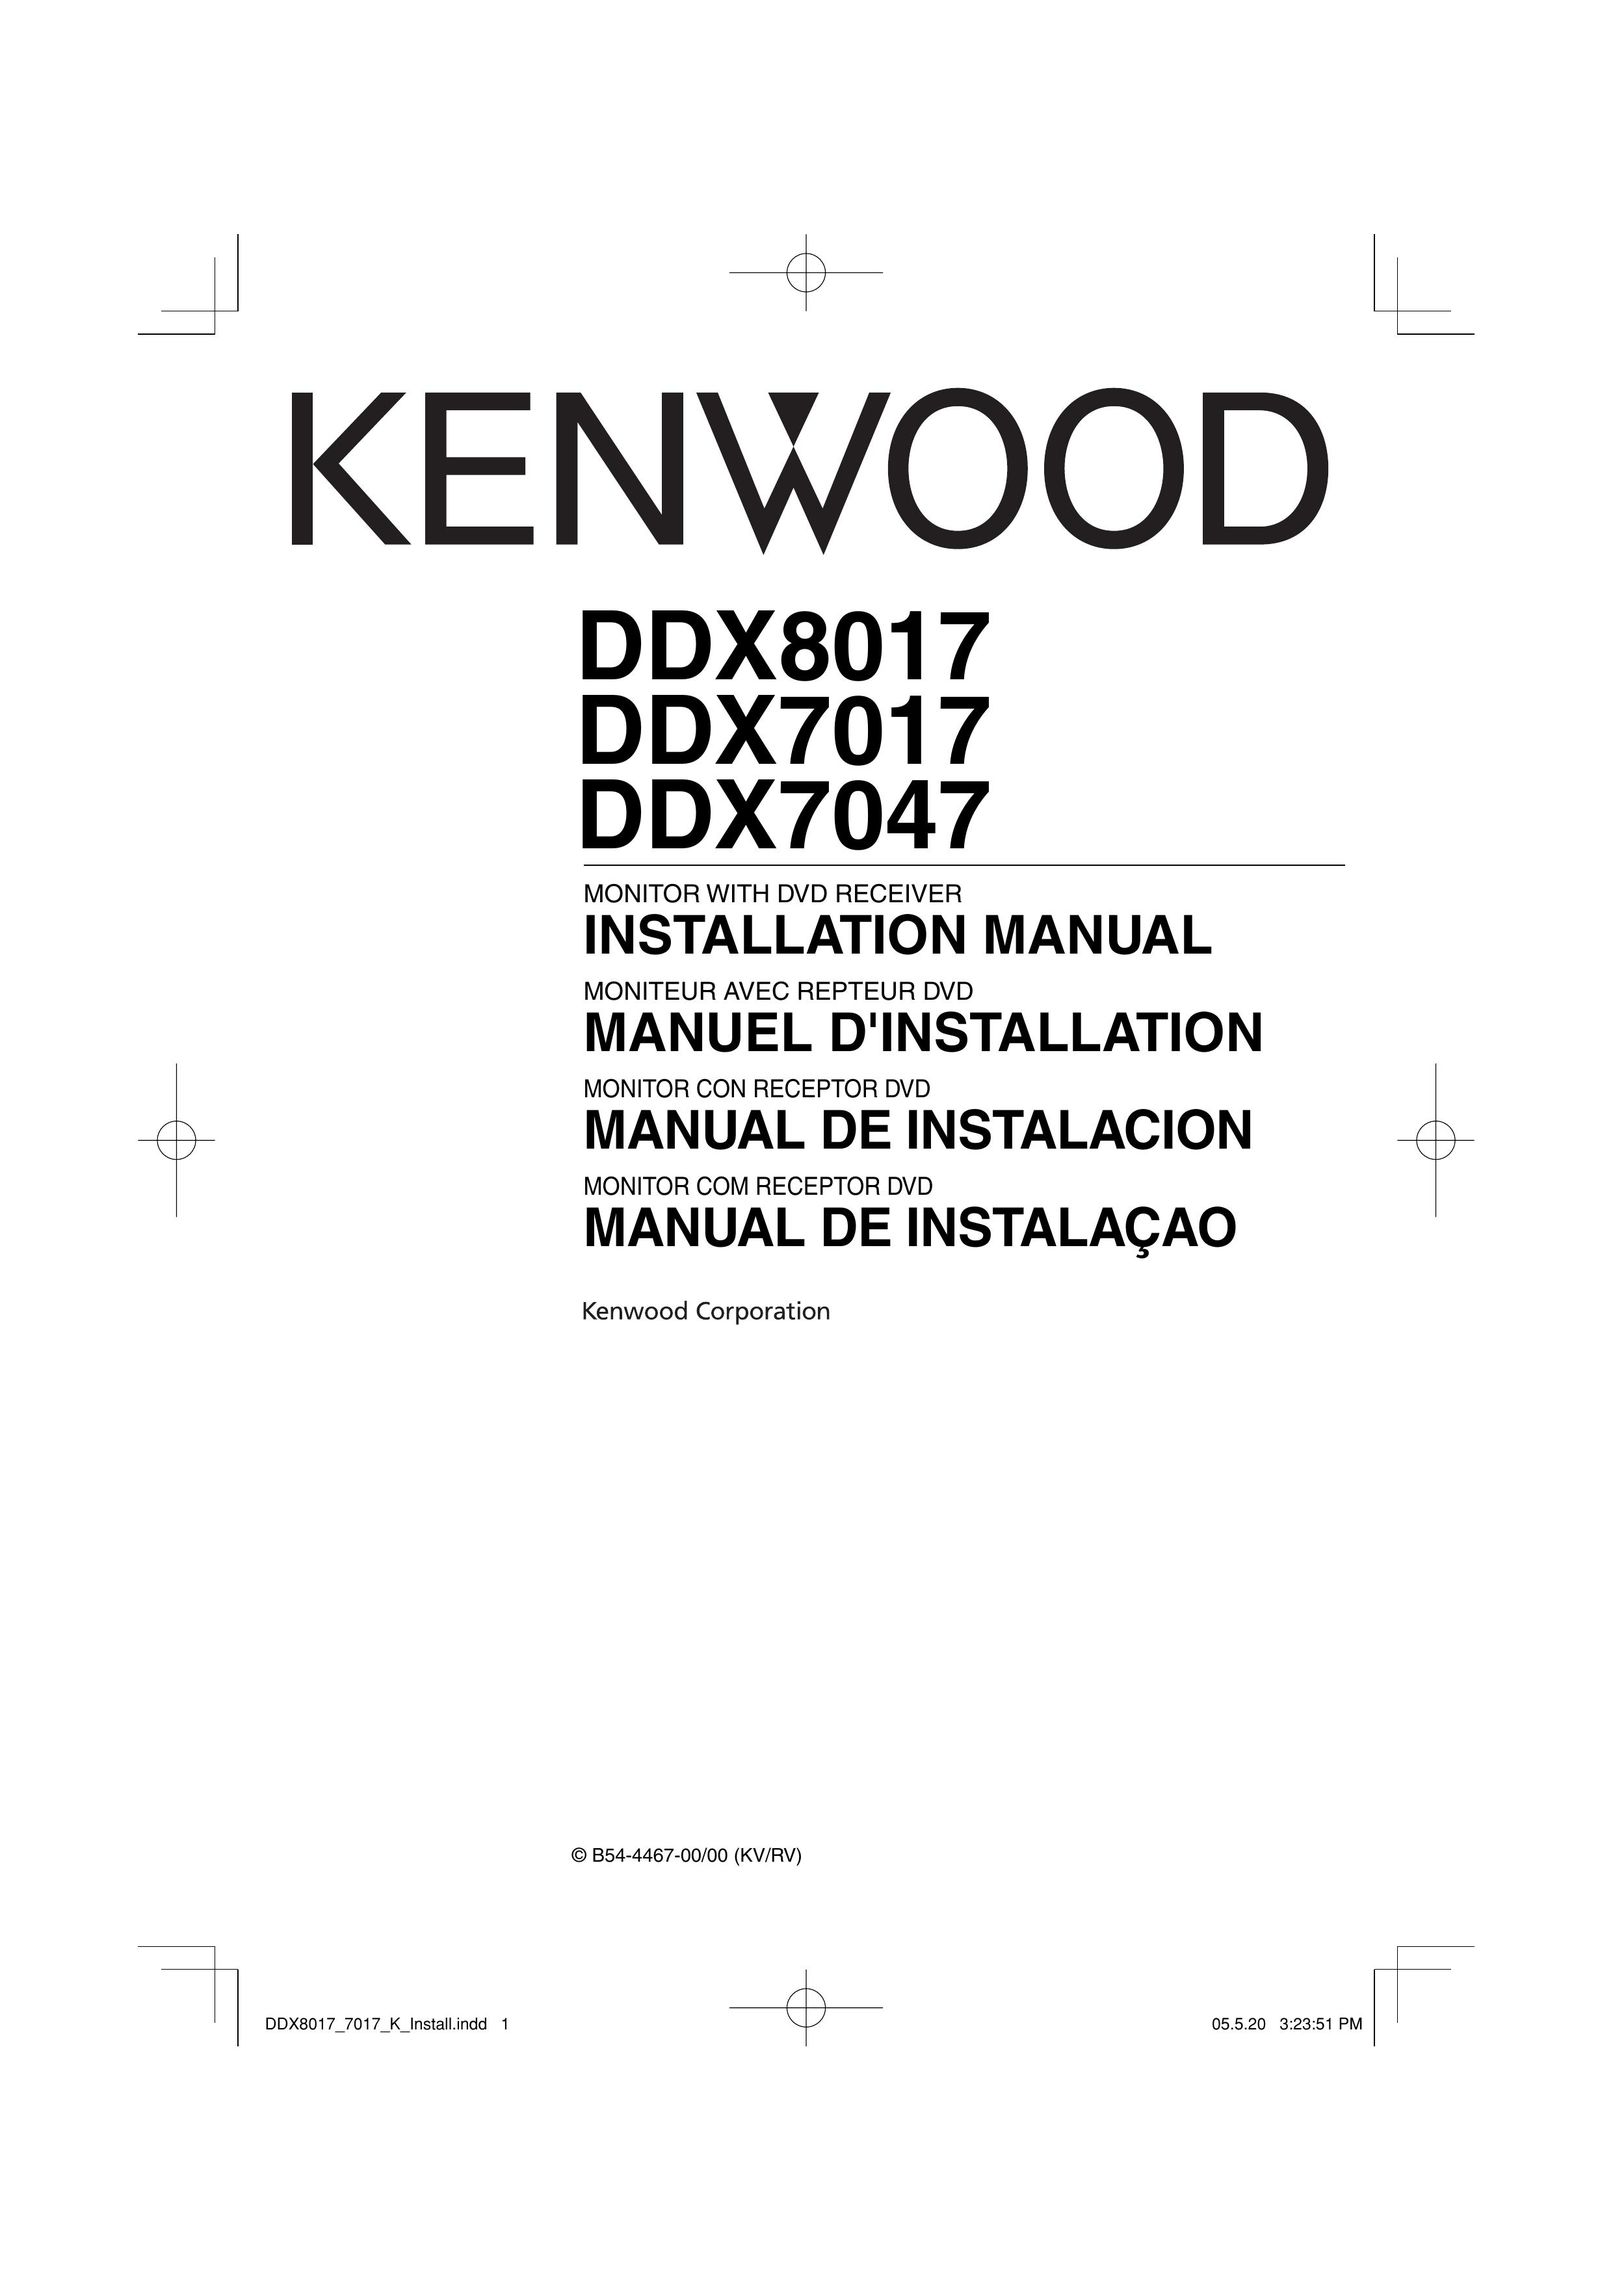 Kenwood DDX7017 Car Stereo System User Manual